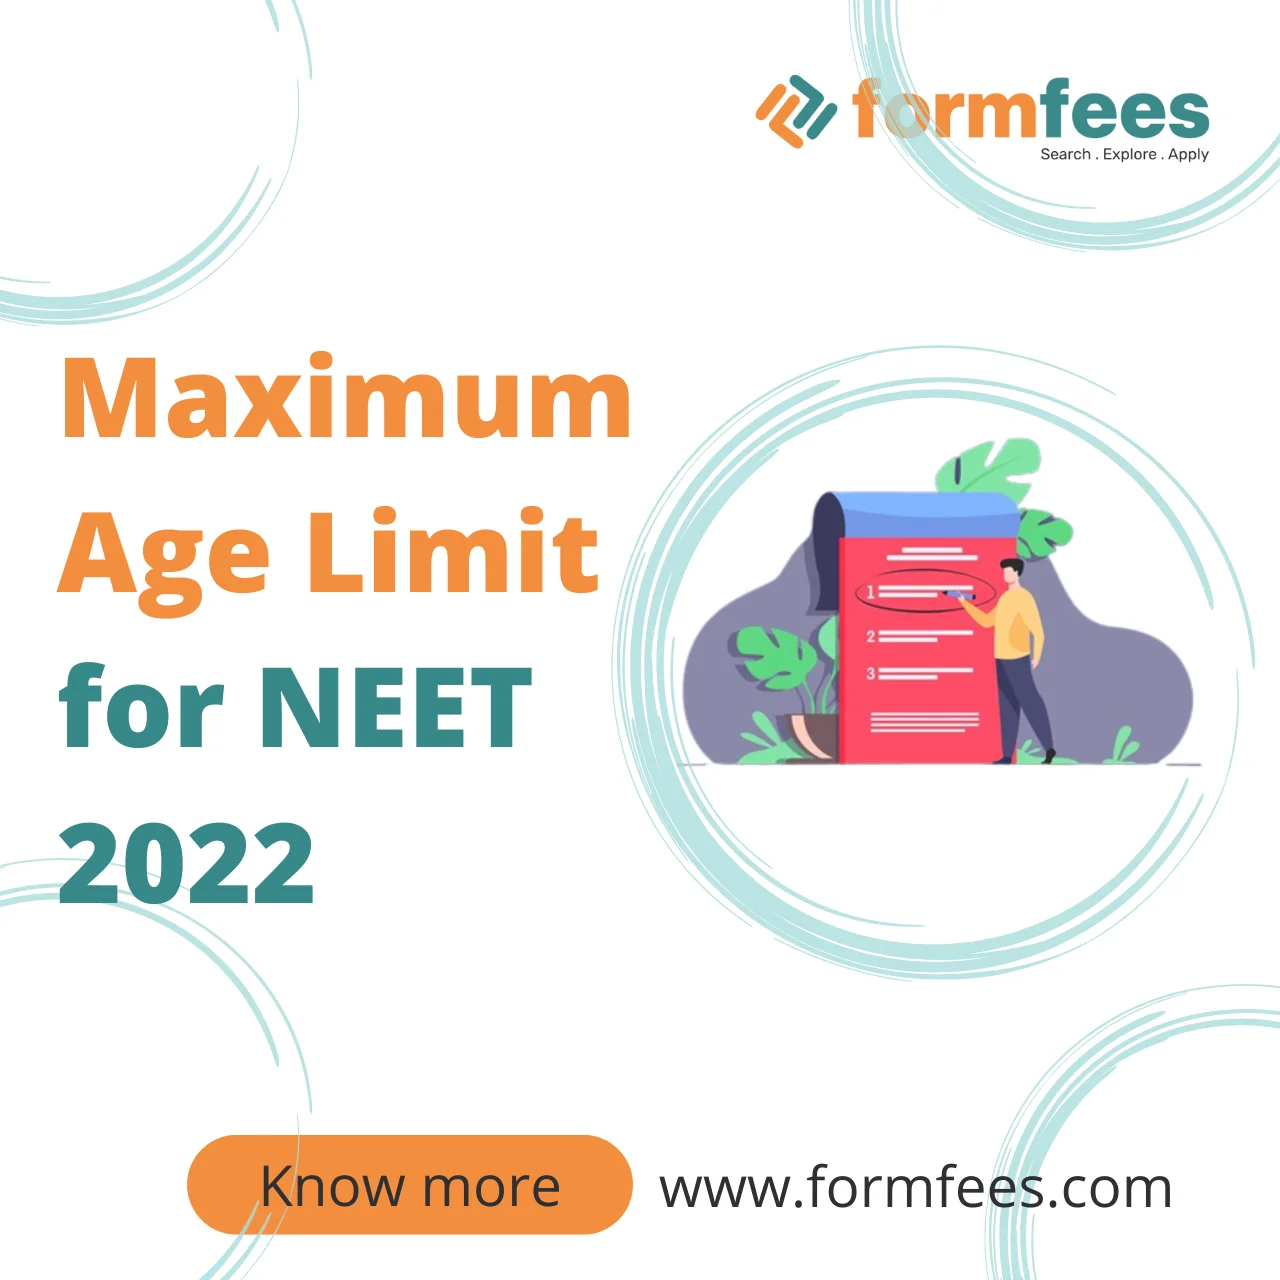 Maximum Age Limit for NEET 2022